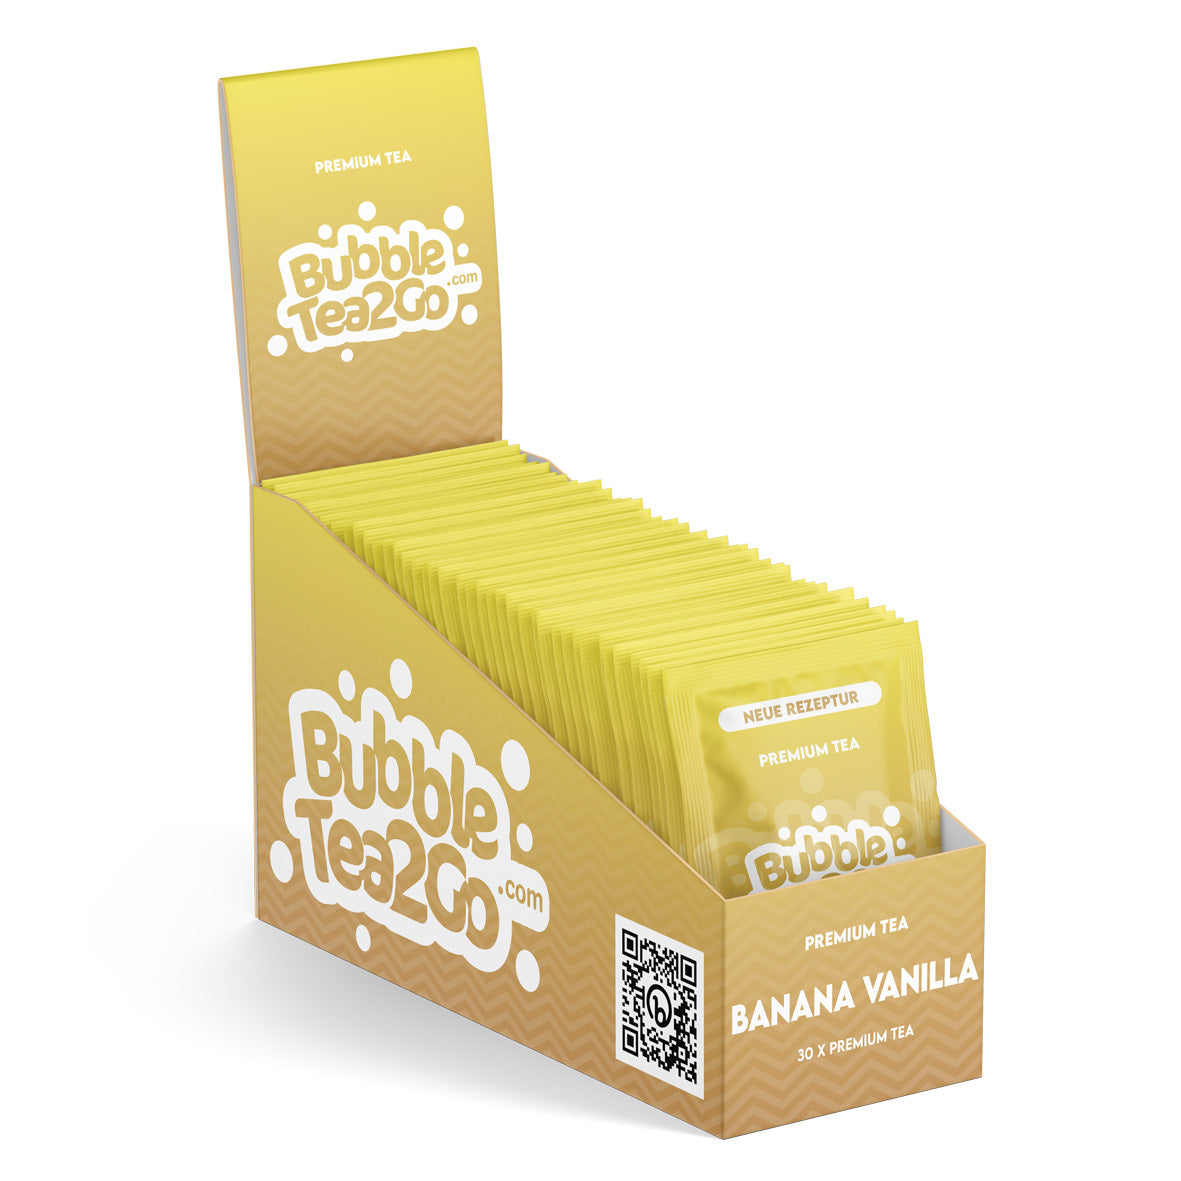 Premium tea benefit box - banana & vanilla (30 pieces)